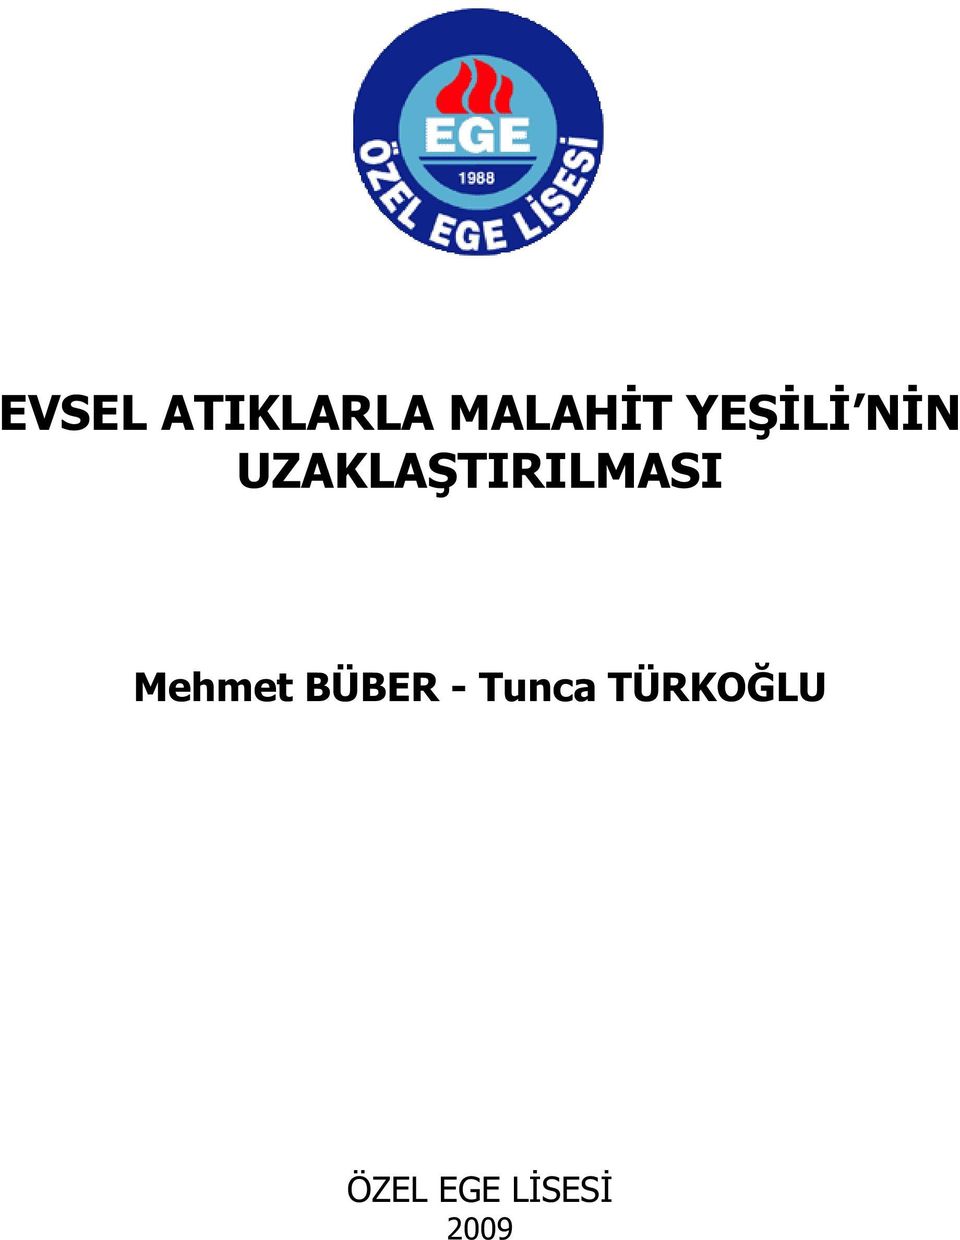 TIRILMASI Mehmet BÜBER -